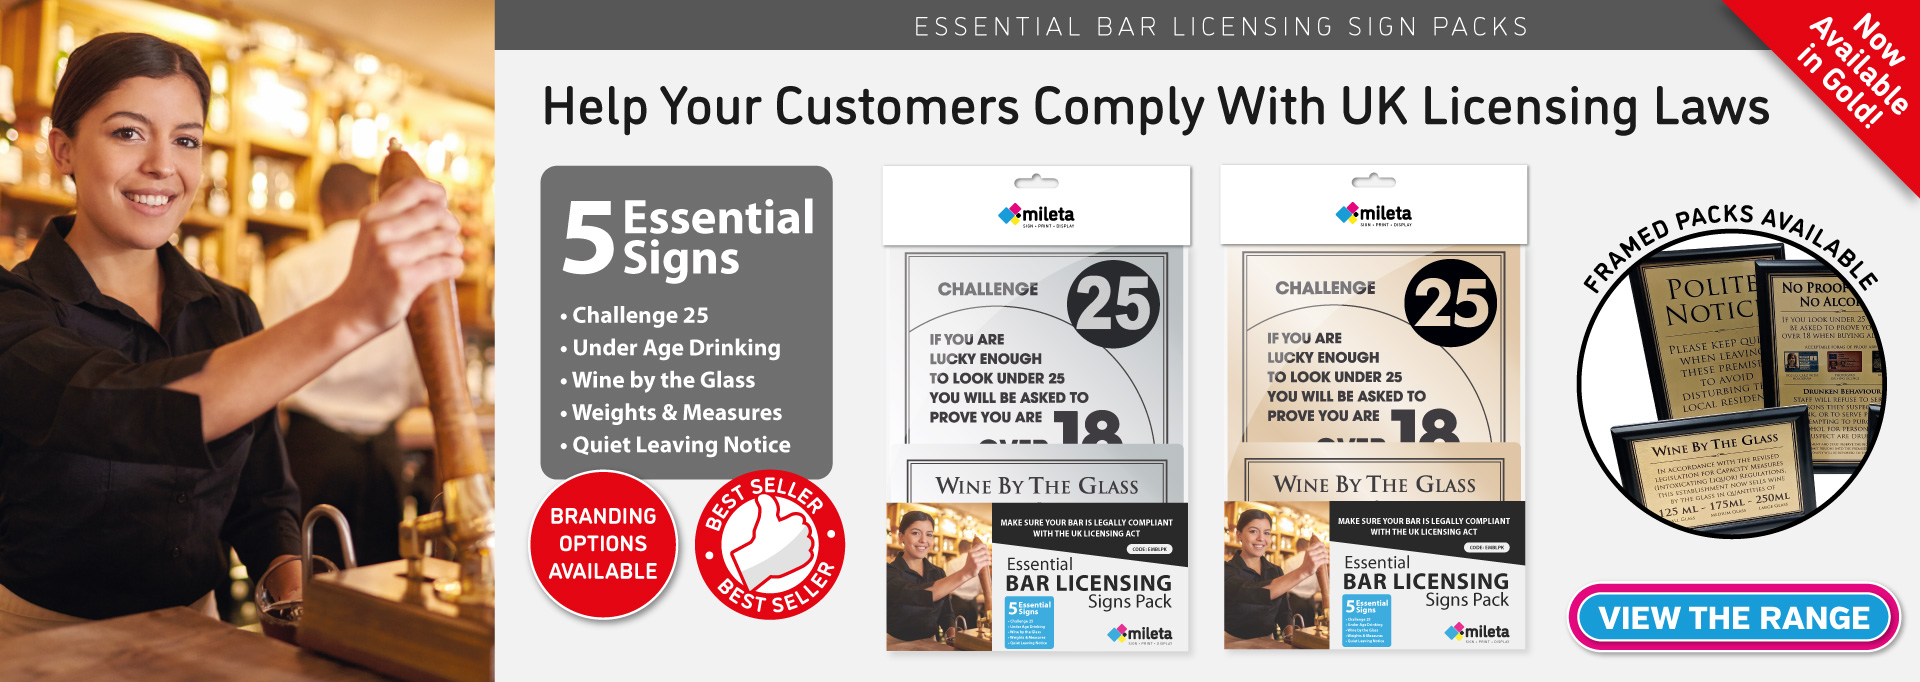 Essential Bar Licensing Sign Packs